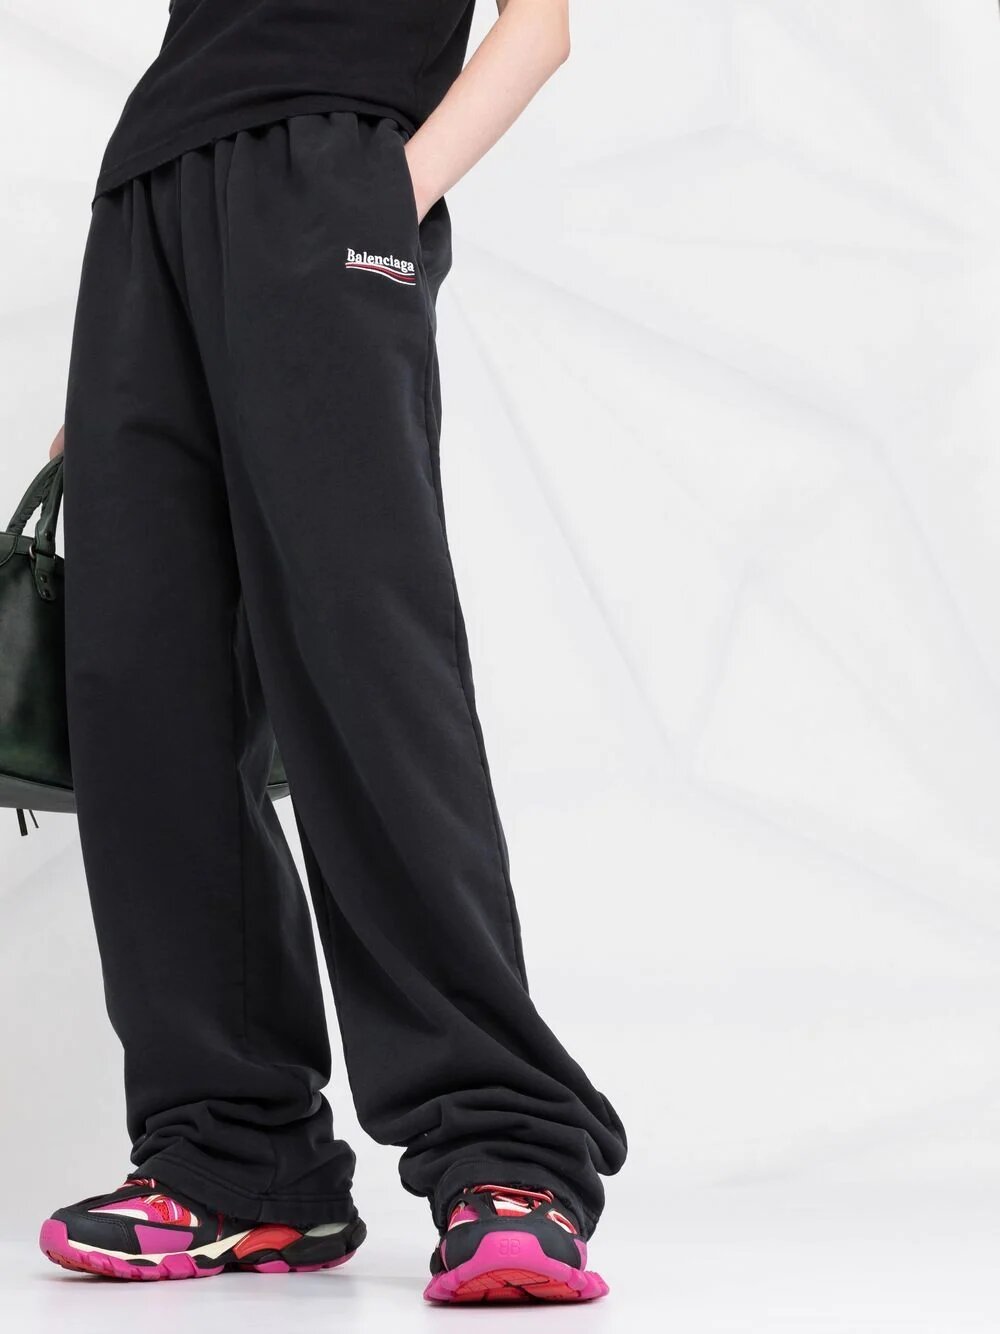 Balenciaga Faded Cottonjersey Oversized Sweatpants  Black  Editorialist